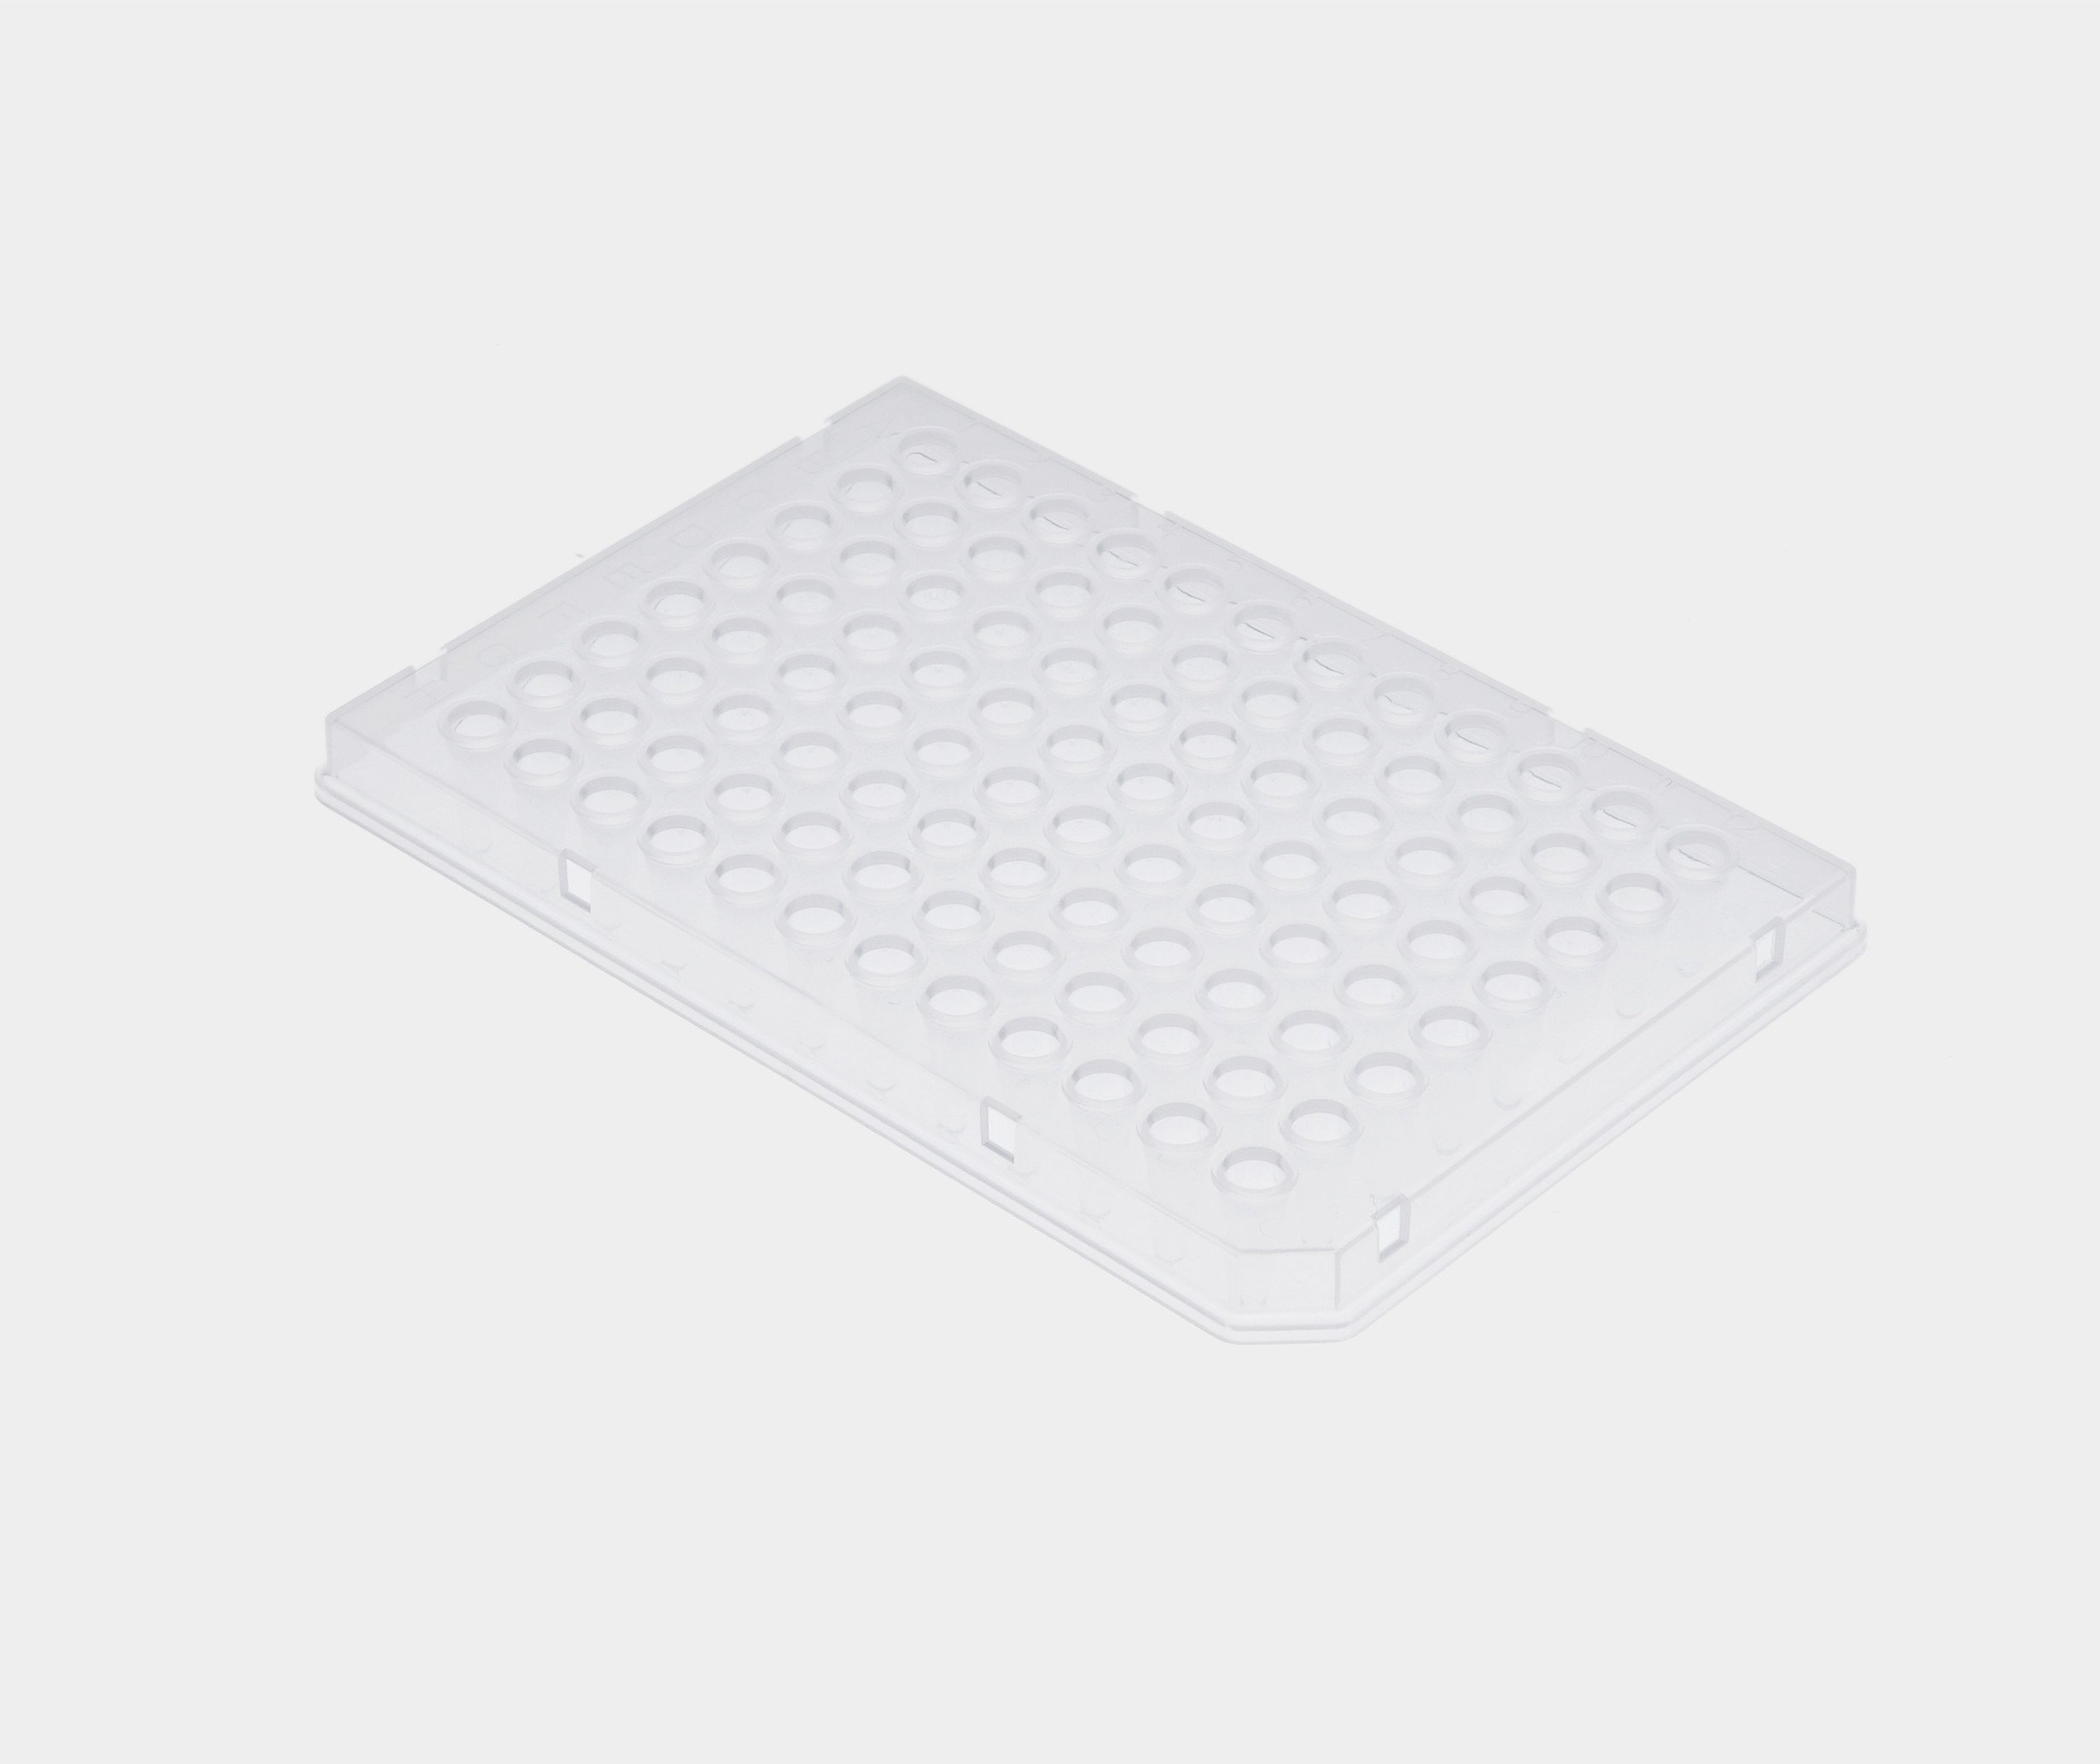 96Well 0.1ml Transparent Half Skirt PCR Plate